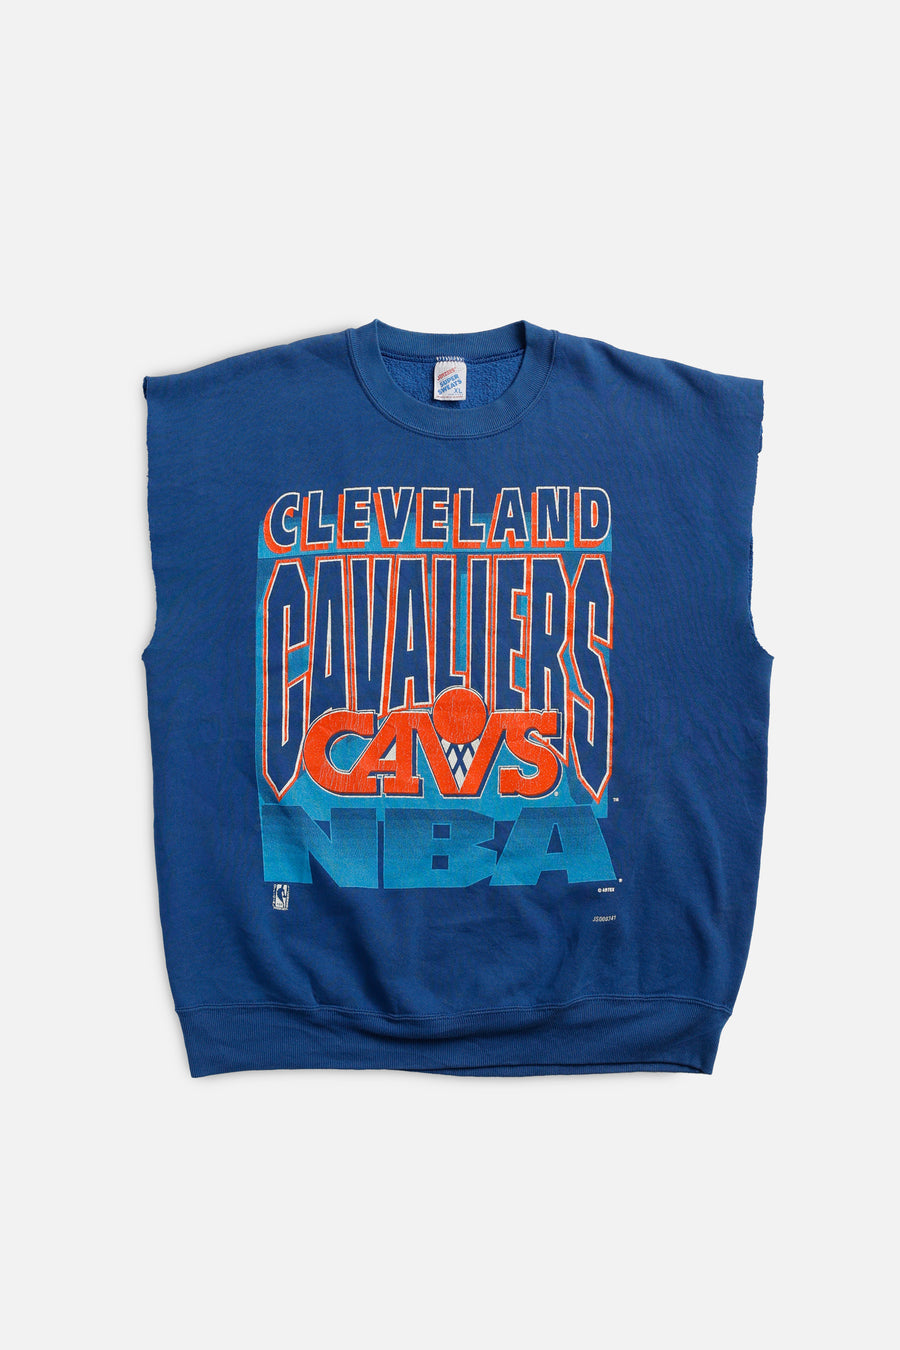 Vintage Cleveland Cavaliers NBA Cut Off Sweatshirt - XL